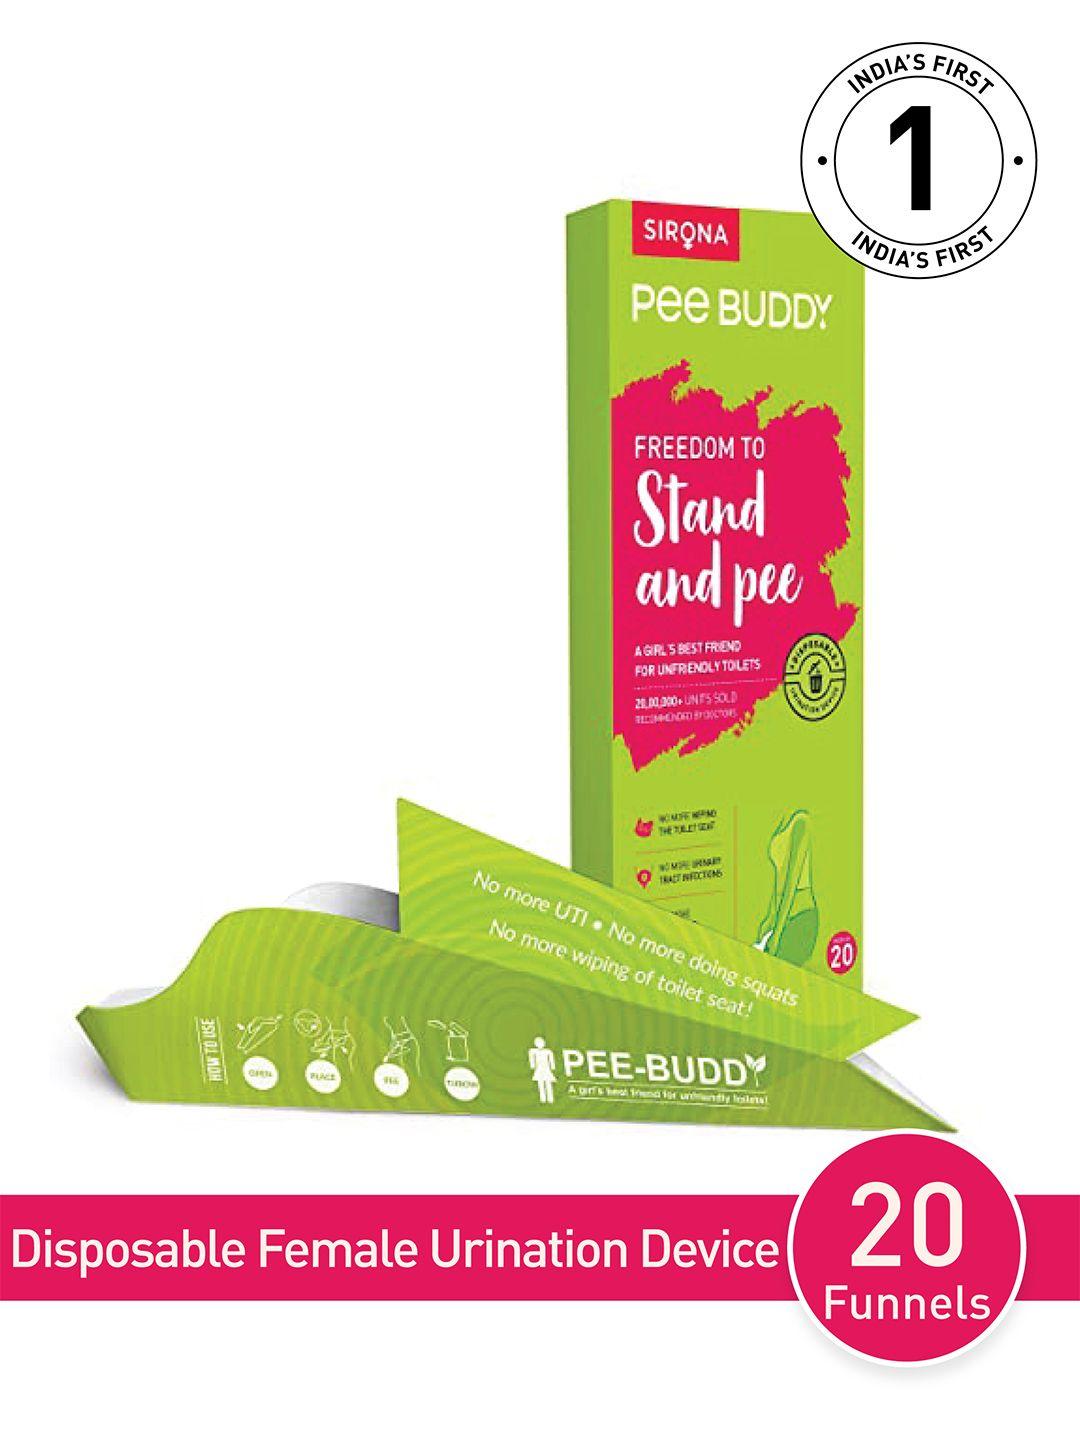 peebuddy disposable female urination device - 20 funnels